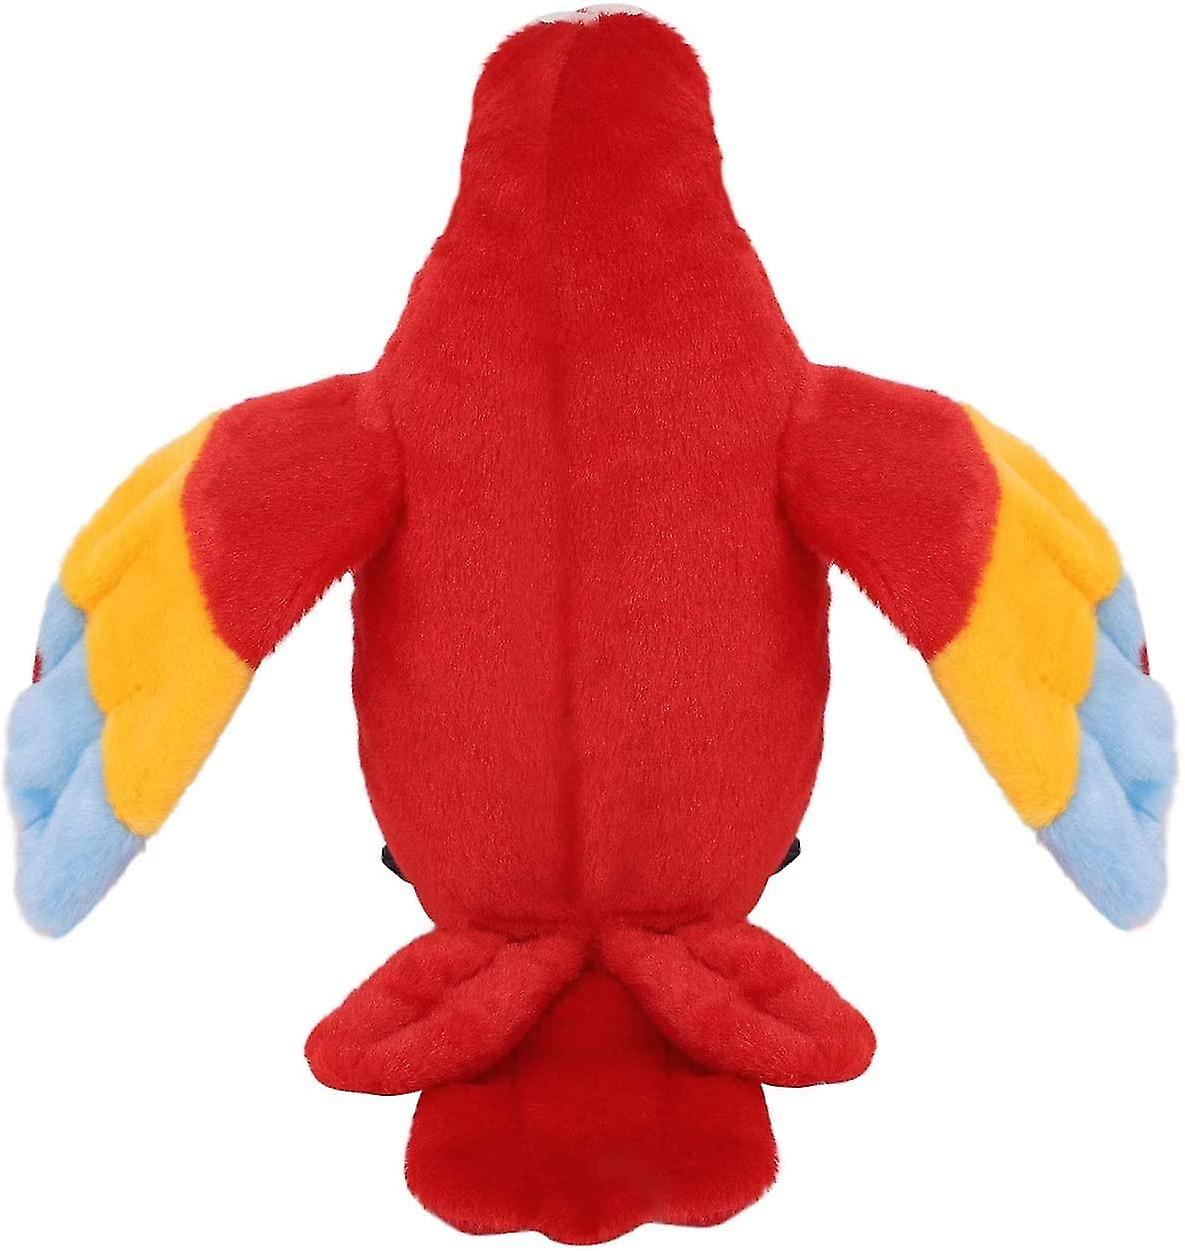 vredig Ban financiën Pratende papegaai speelgoed- Talking Parrot - 24winkelen